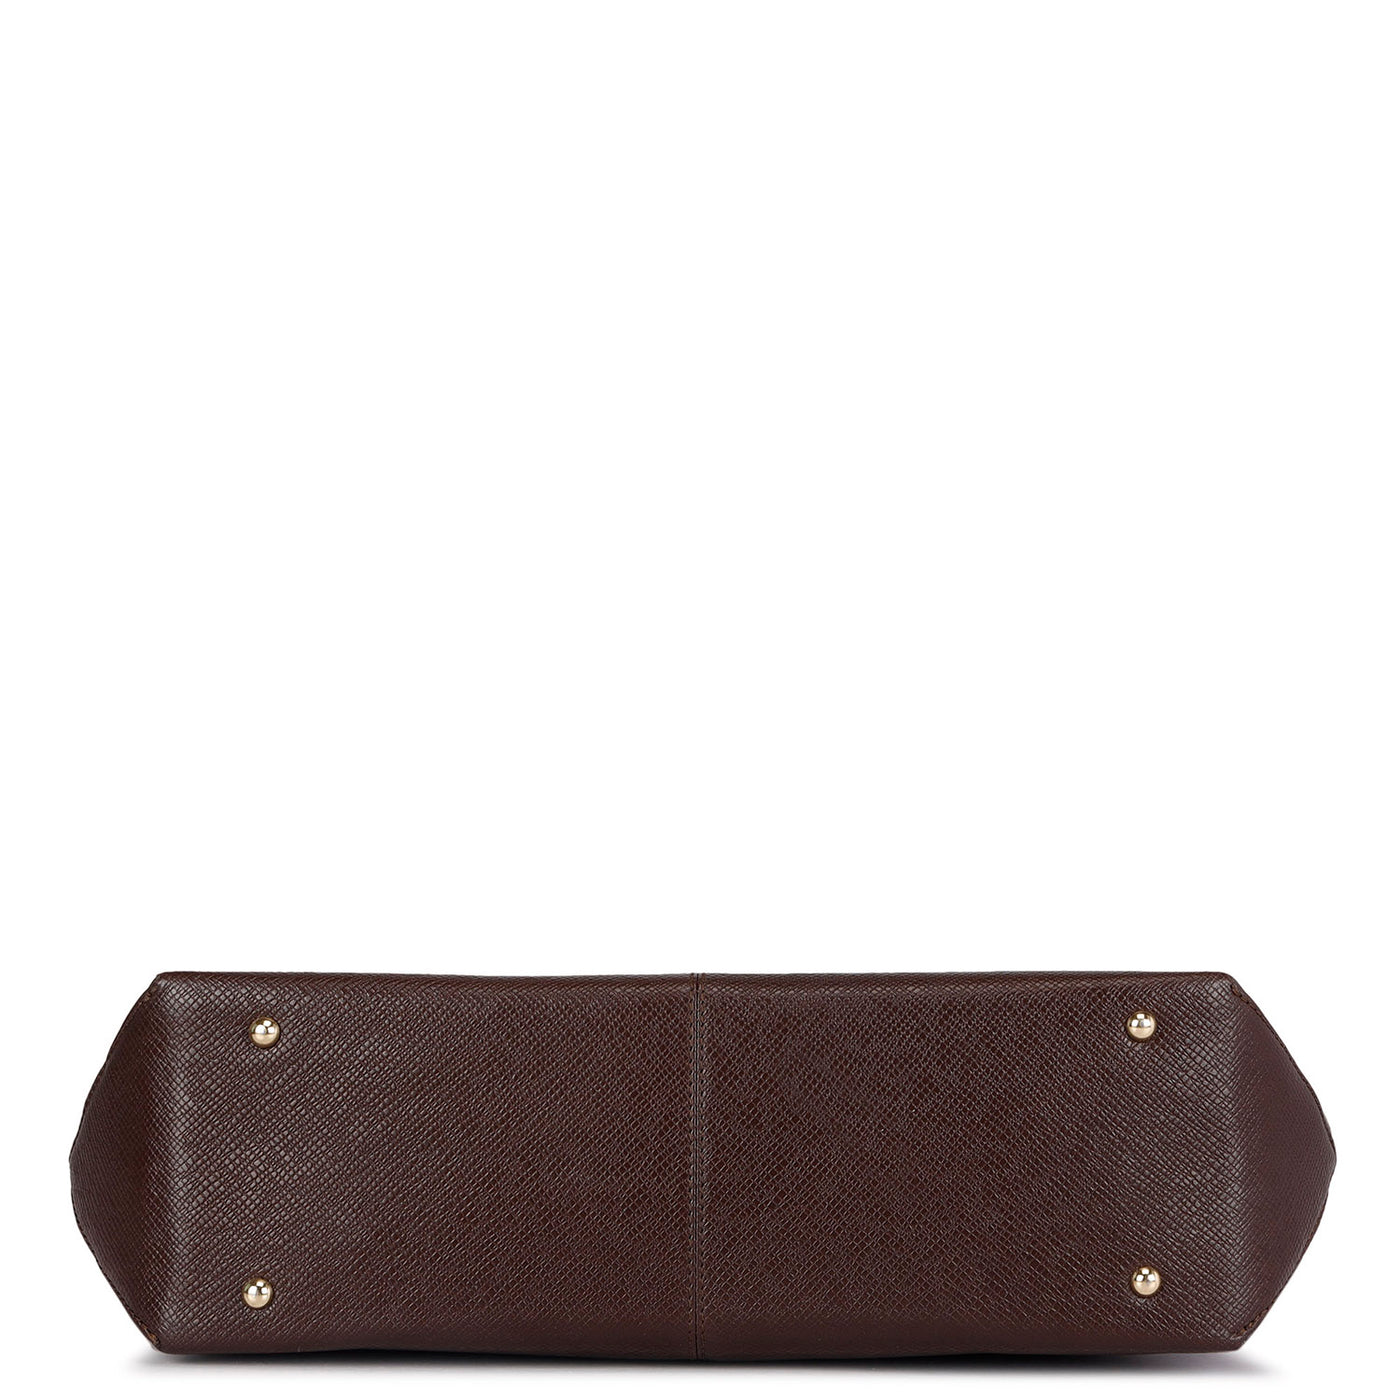 Medium Croco Leather Tote - Brown